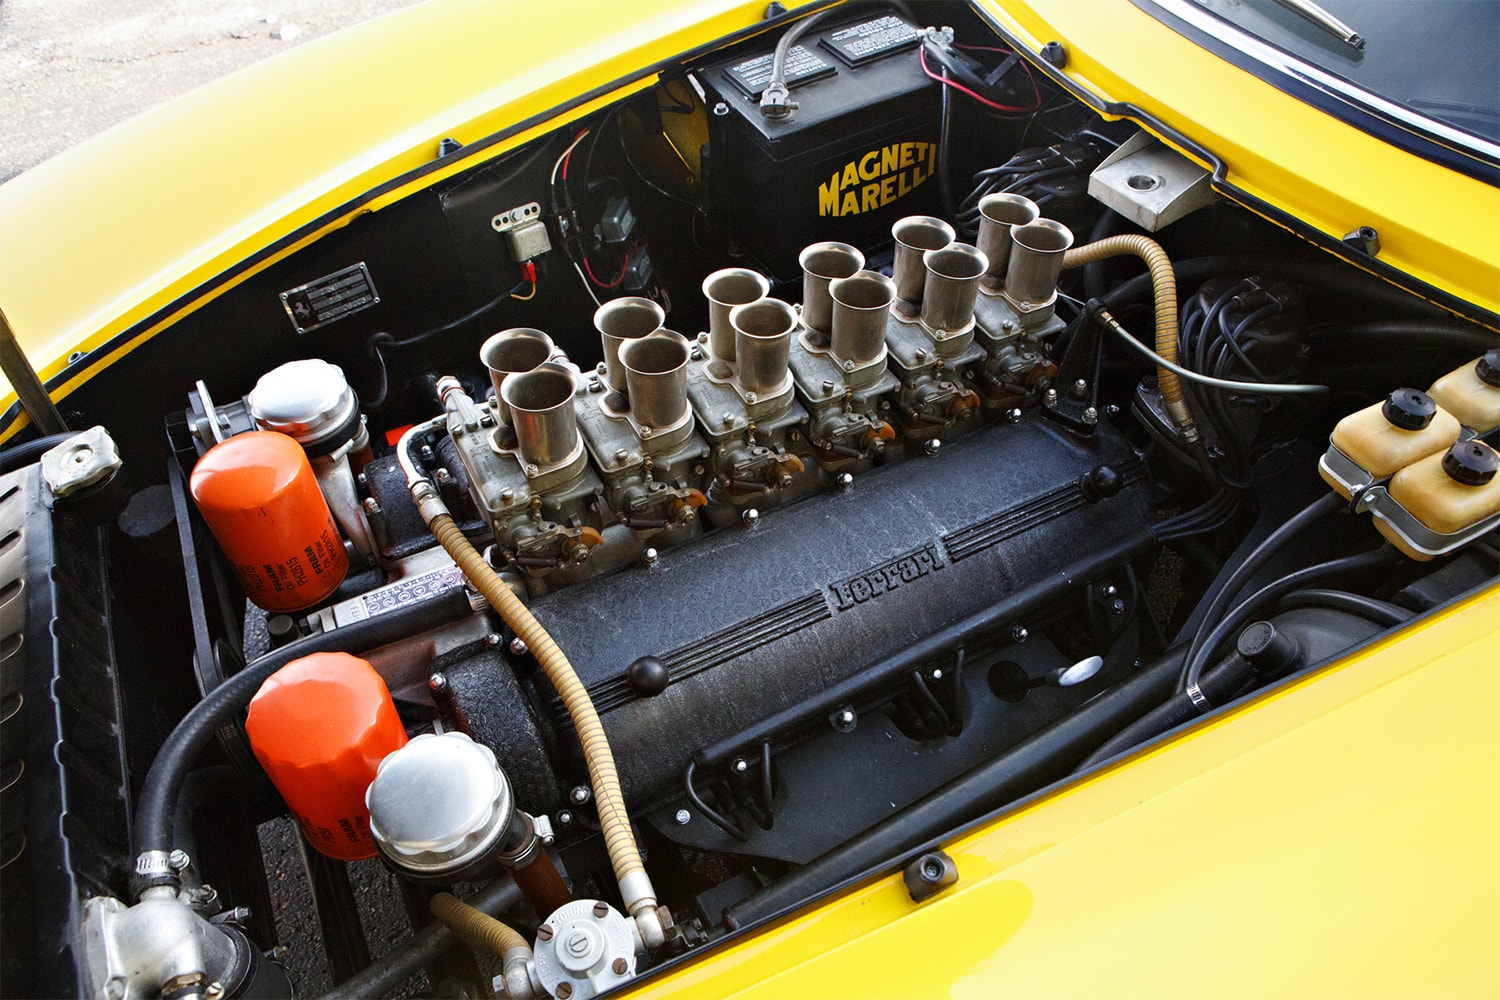 1964 Ferrari 275 GTB Prototype Gooding Company Auction cars supercar sports luxury Italian auctions 